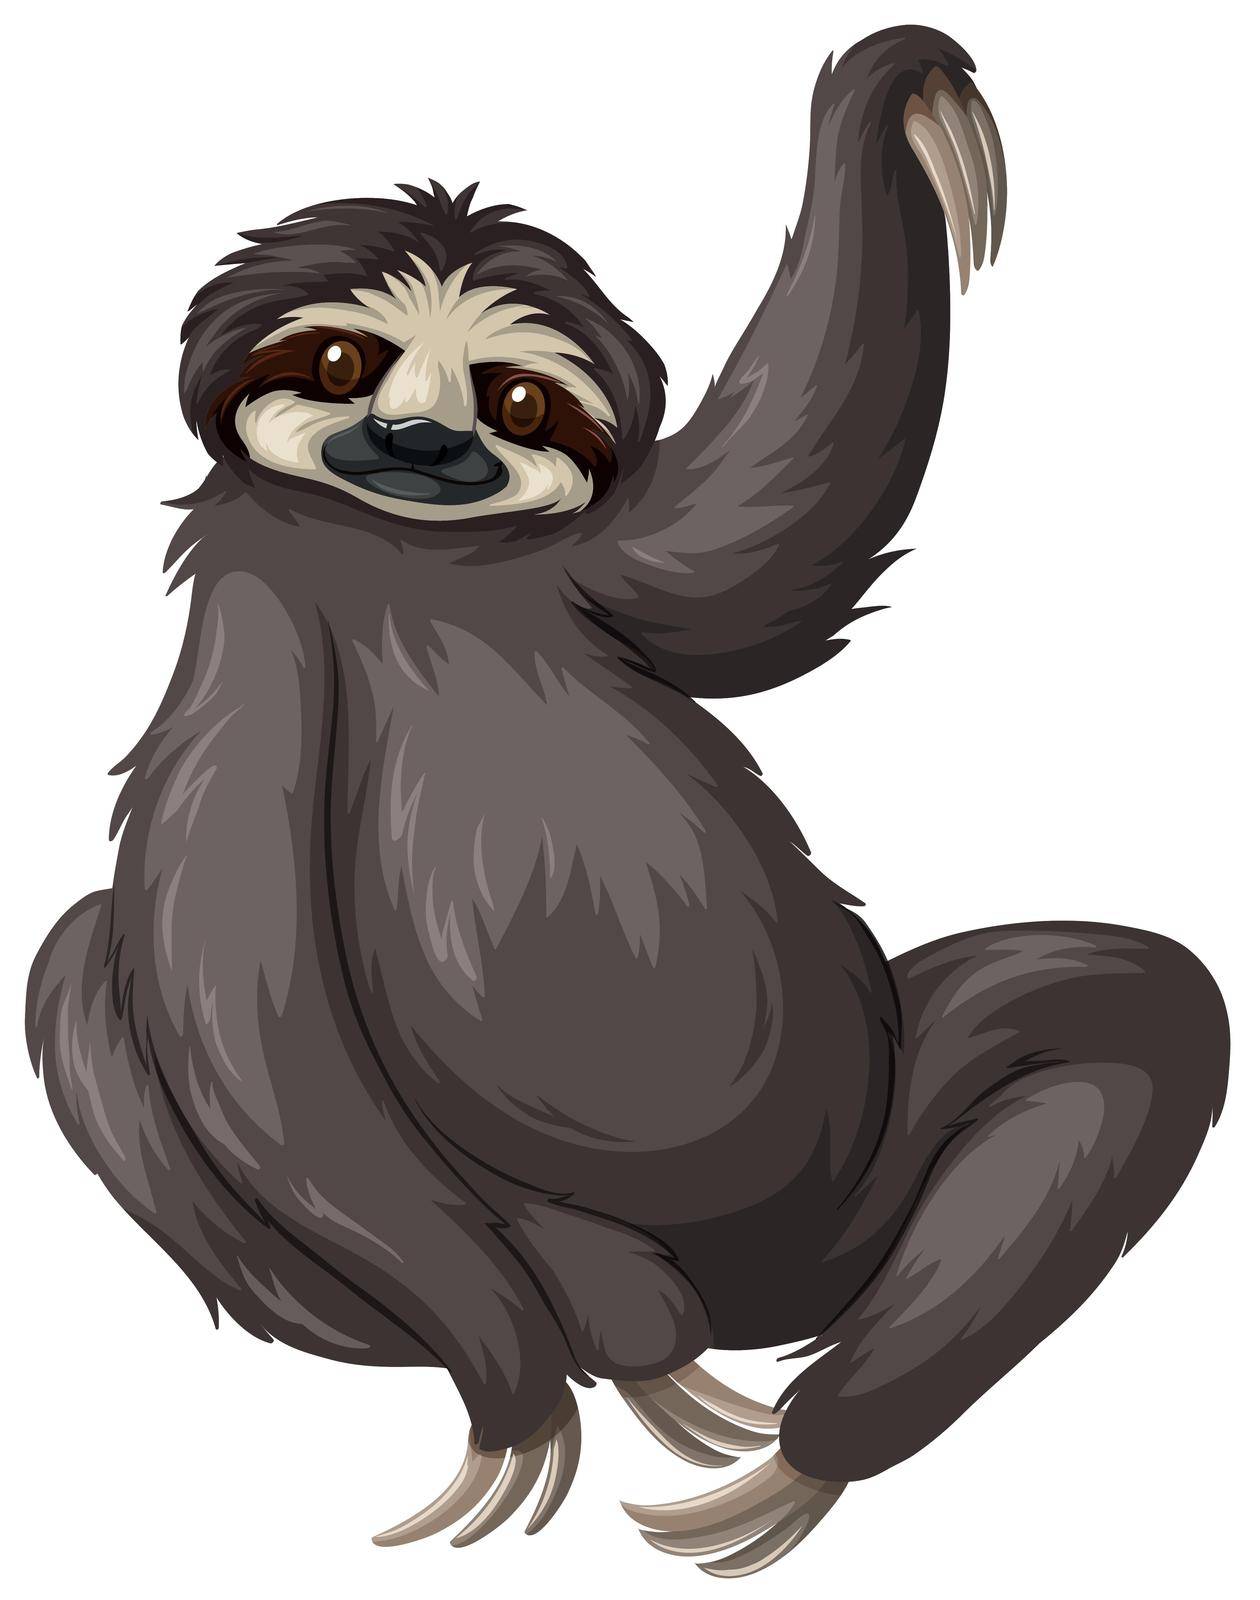 Sloth with black fur by iimages